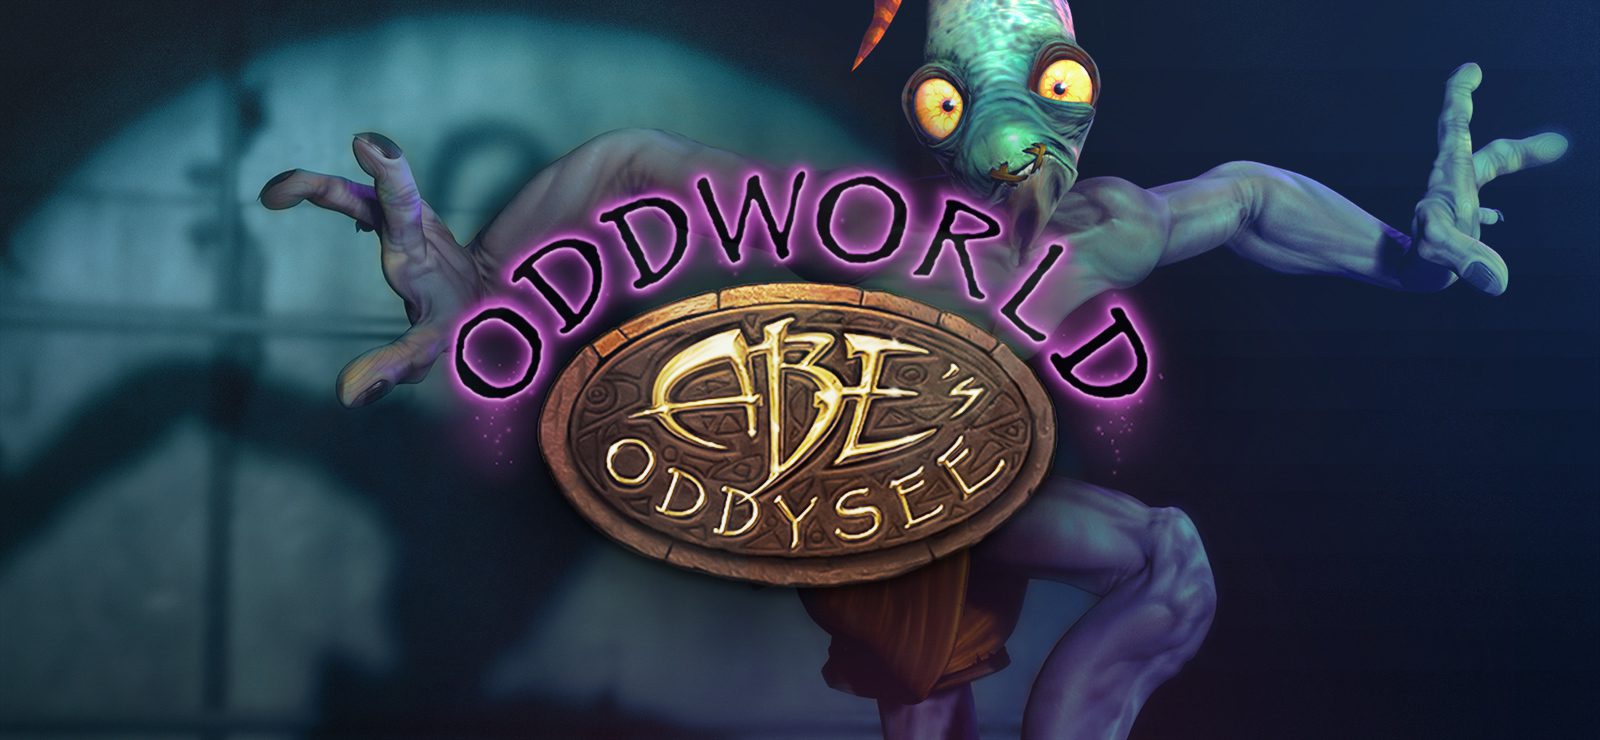 Free on Steam: Oddworld: Abe’s Odyssey + Oddworld Sale, Yet Another Zombie Defense